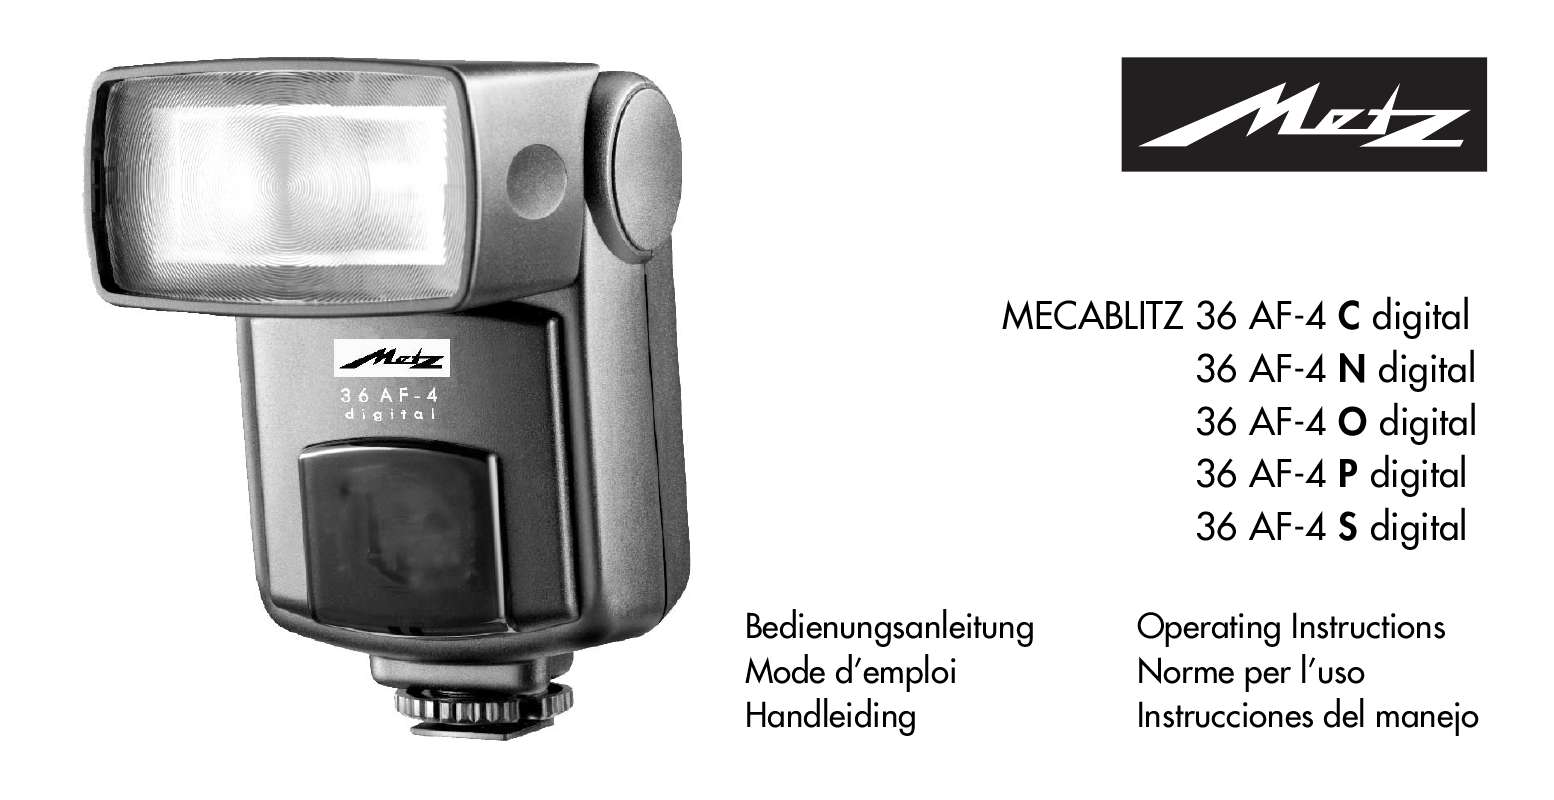 Guide utilisation  METZ MECABLITZ 36 AF-4 C DIGITAL  de la marque METZ